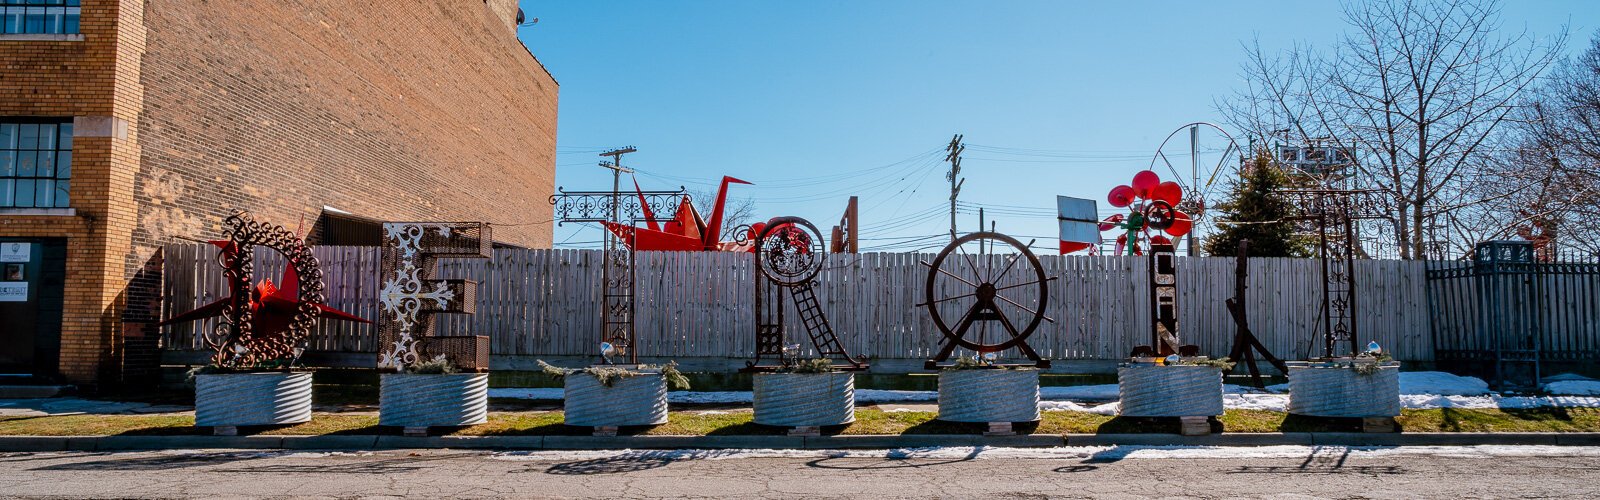 CAN Art Handworks Sculpture Park & Detroit Windmill Wind Turbine Farm. Photo by Nick Hagen